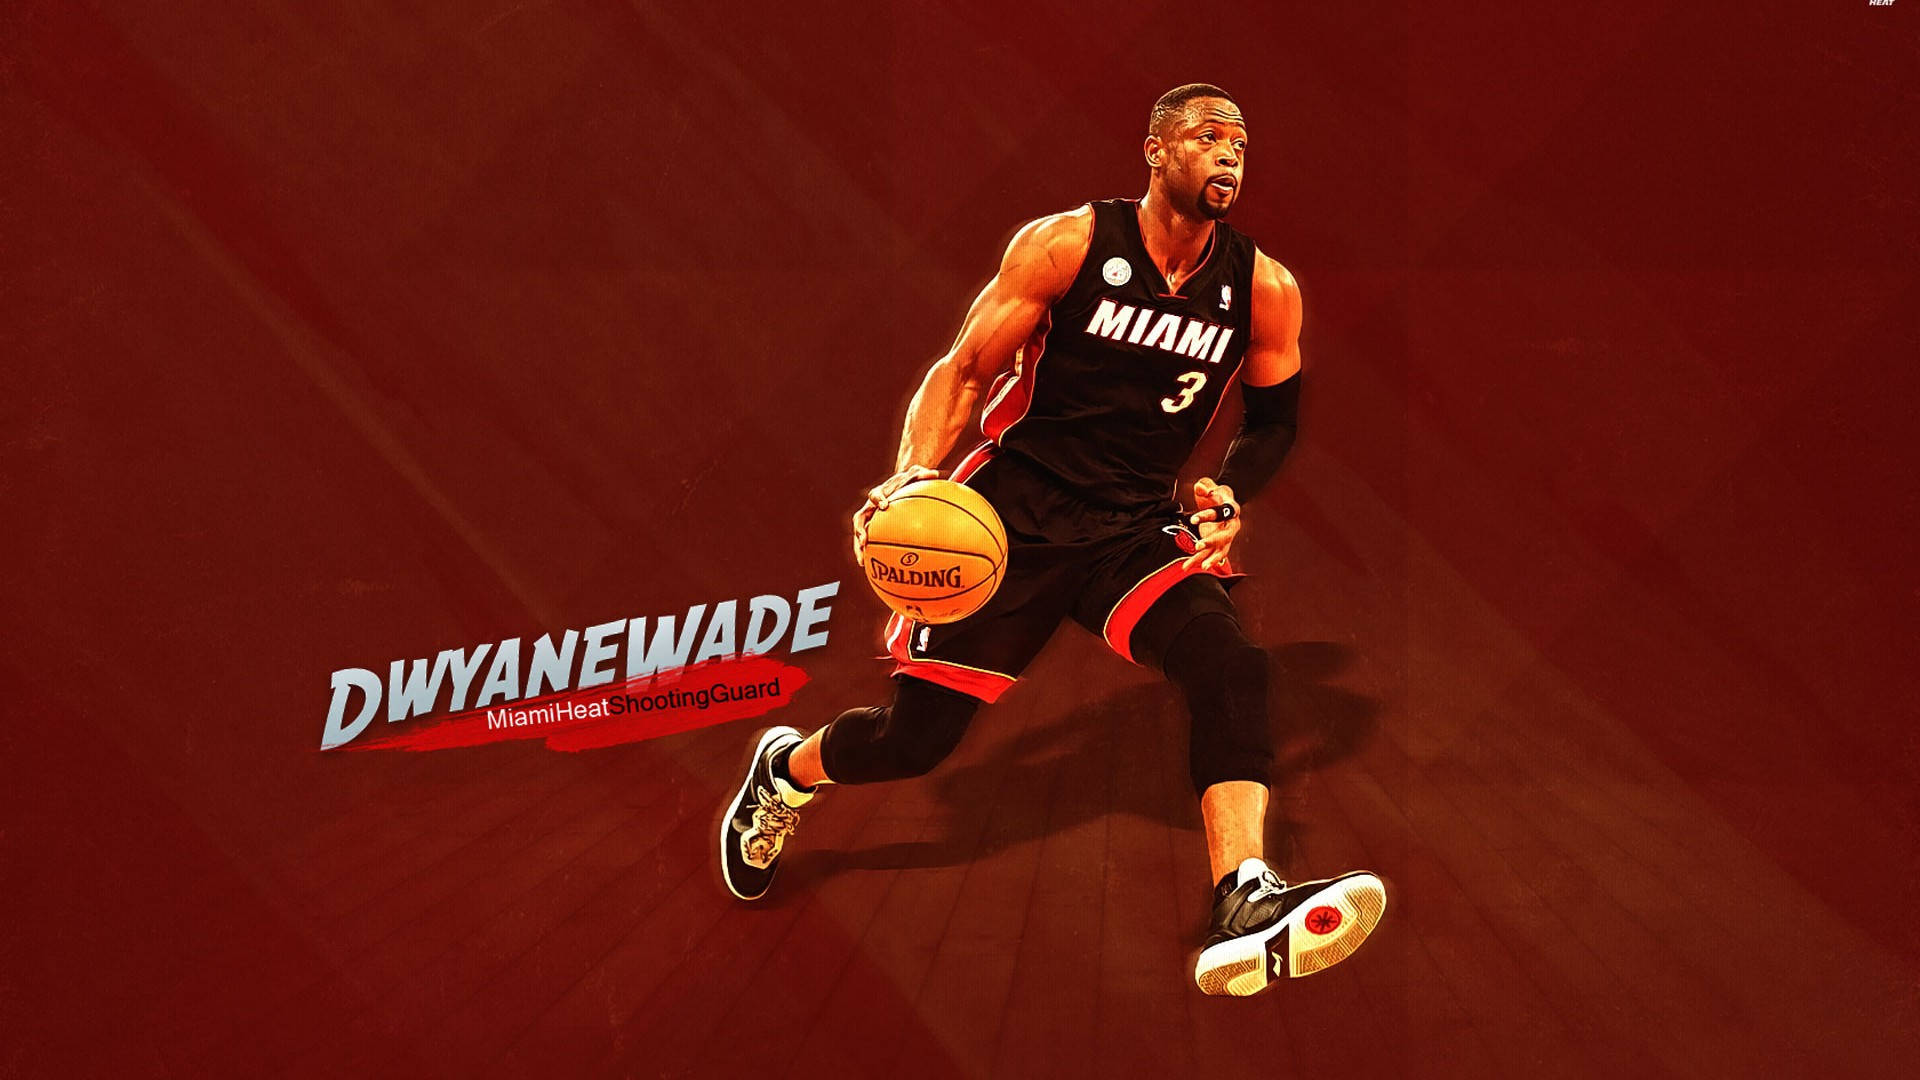 Miami Heat Dwayne Wade